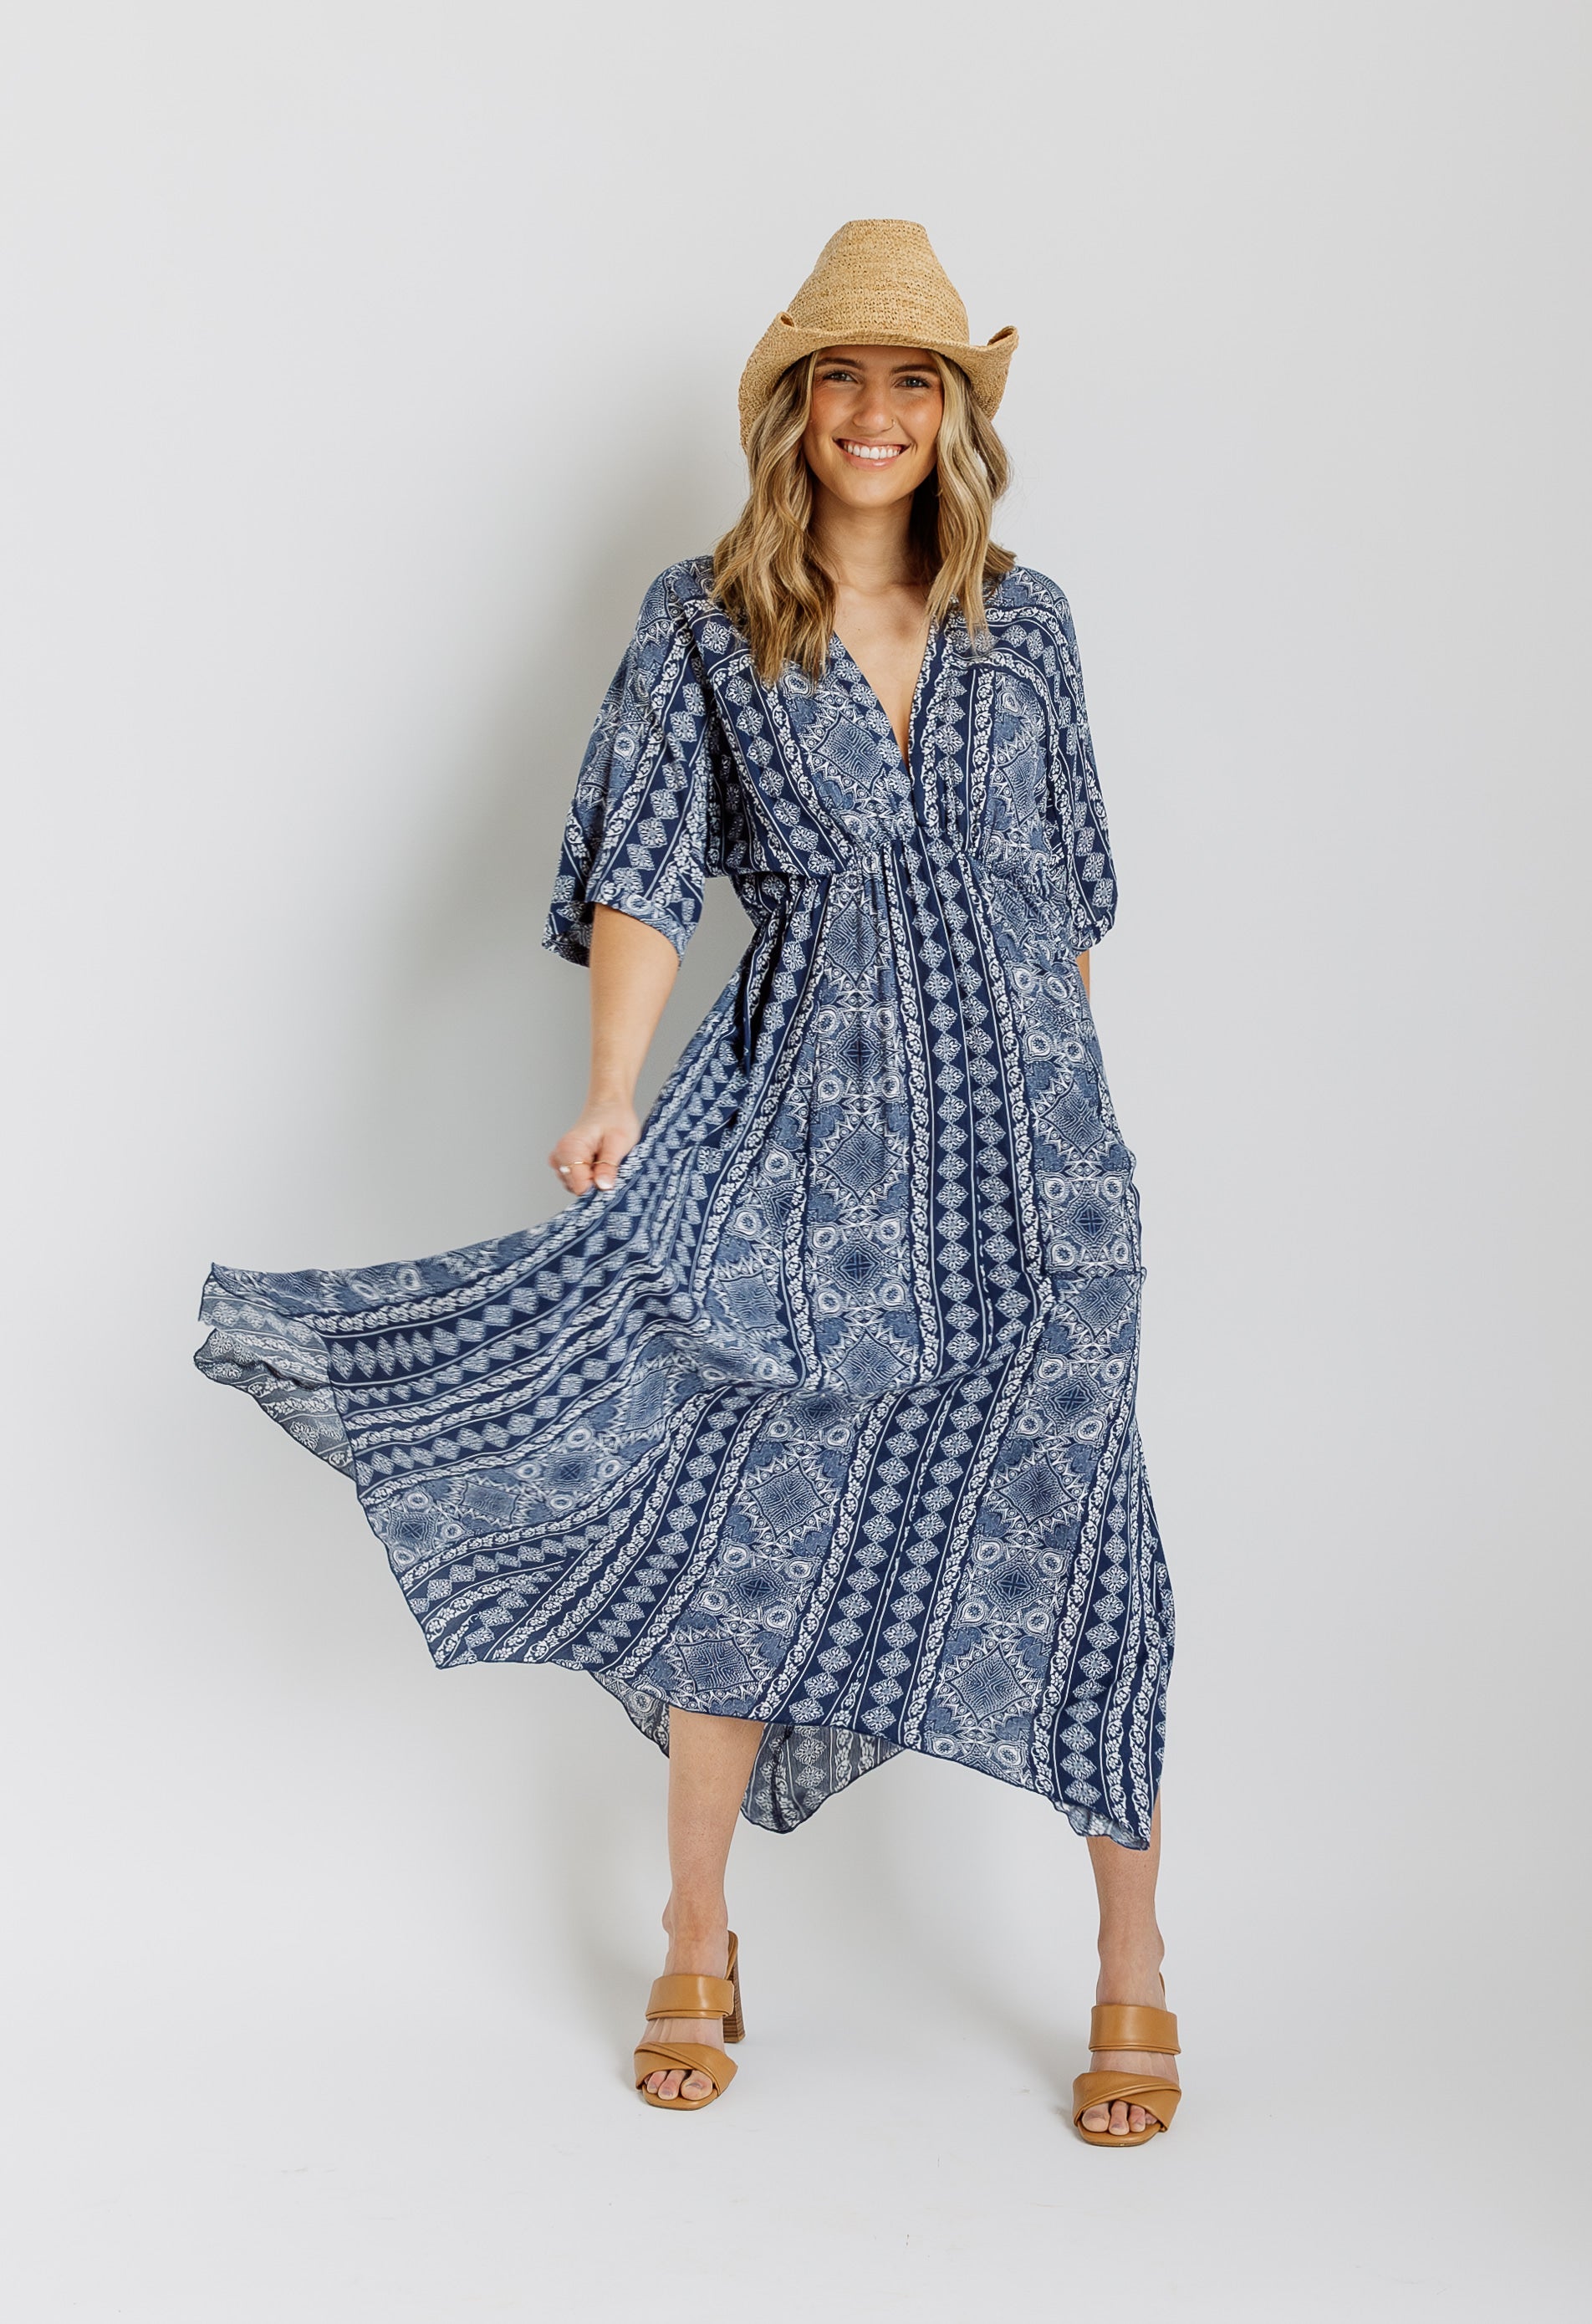 Santorini Summer Dress - NAVY - willows clothing Long Dress